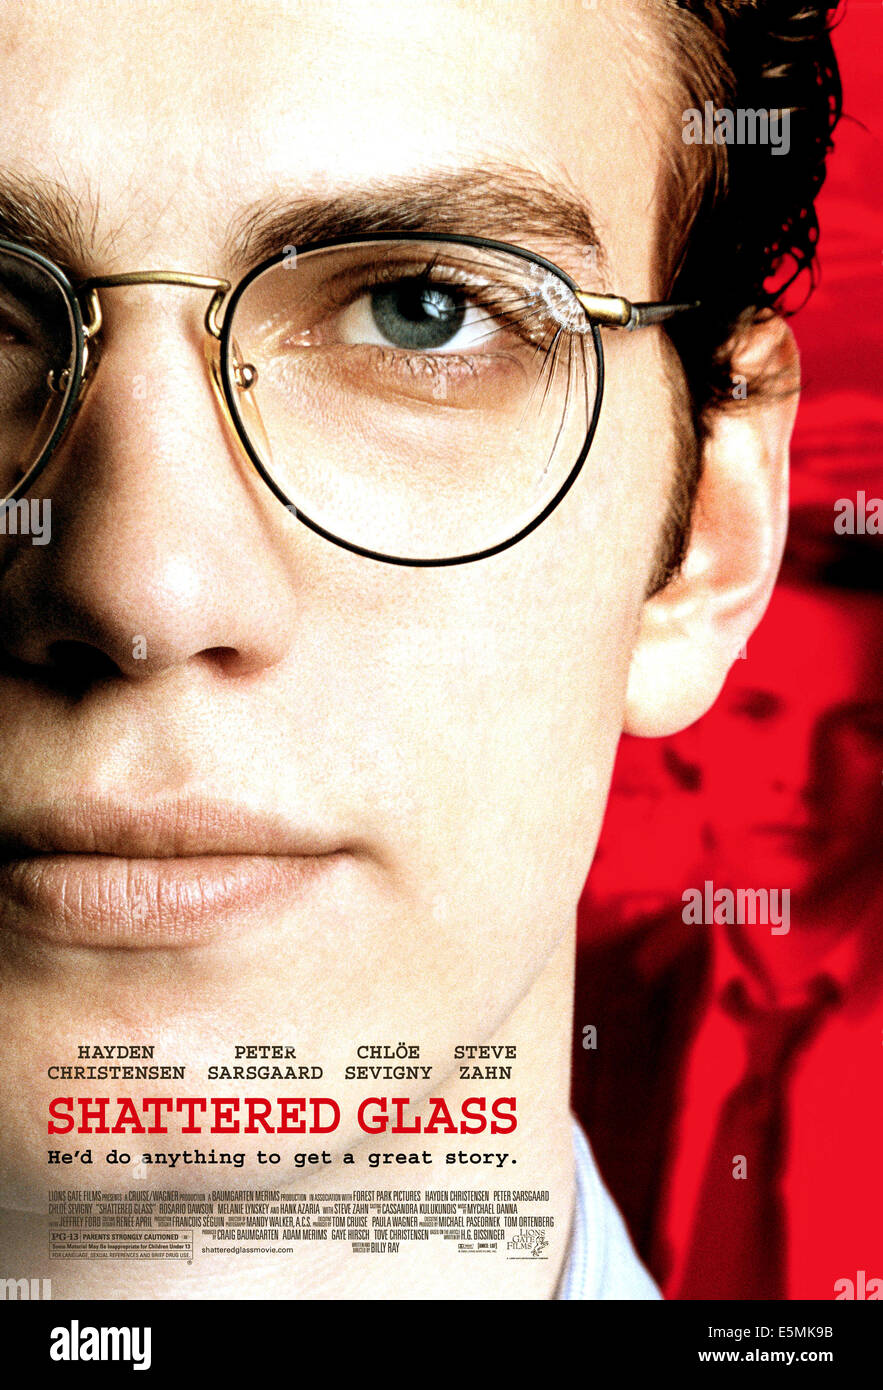 SHATTERED GLASS, Hayden Christensen, 2003, (c) Lions Gate/courtesy Everett Collection Stock Photo